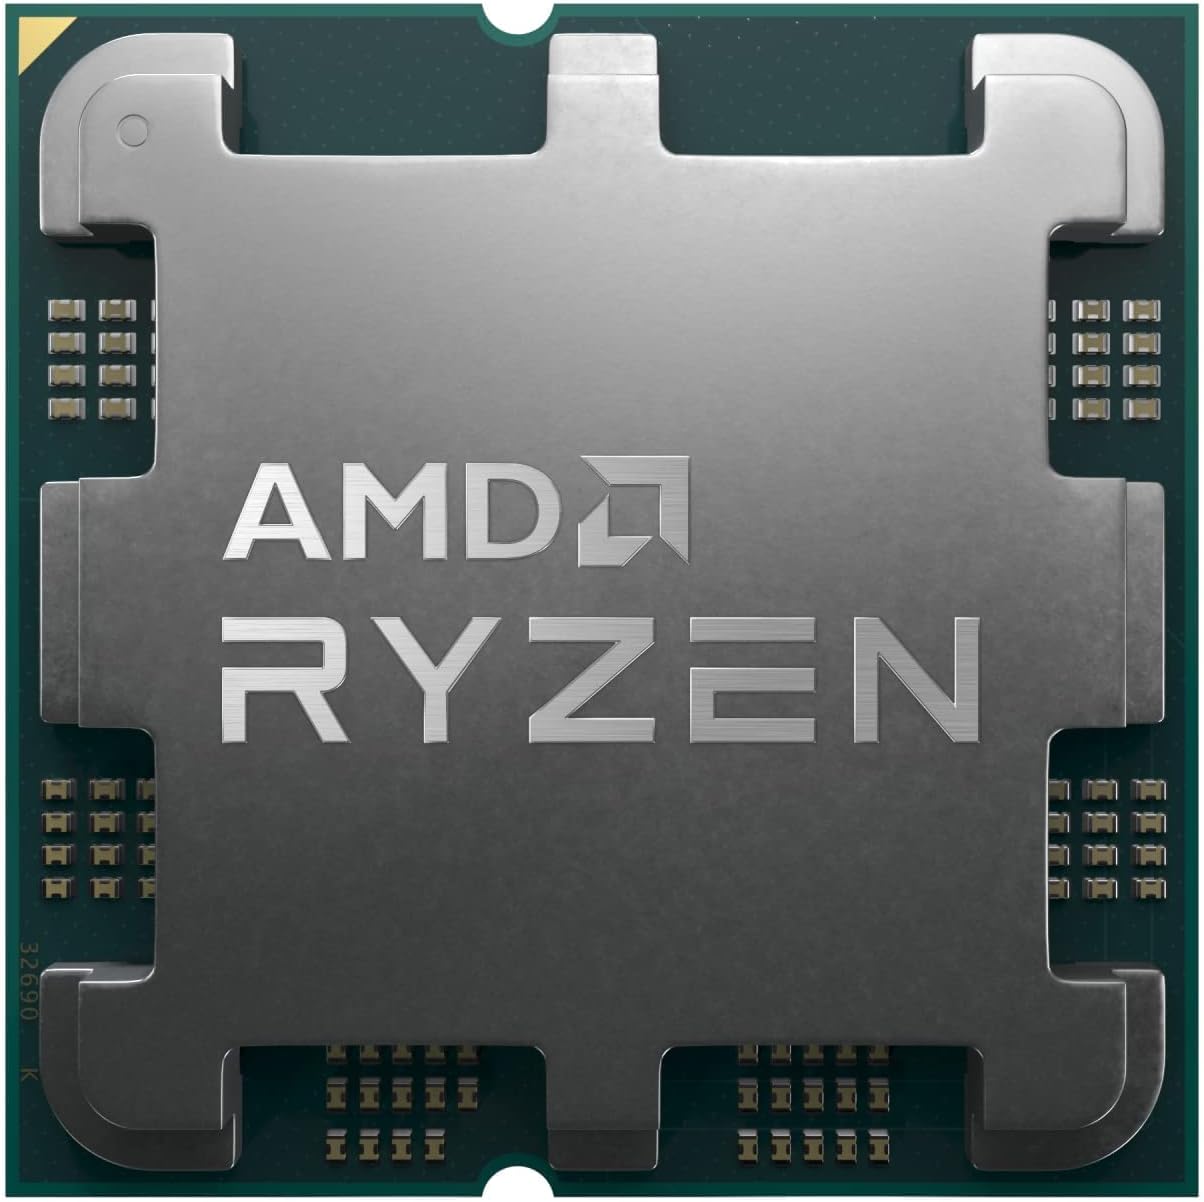 SKU: 0730143314442, Barcode: 730143314442 - AMD Ryzen 5 7600X 4.7GHz 6 Core AM5 Desktop Processor Boxed: 5.3 GHz Max Boost, unlocked for overclocking, 38 MB cache.